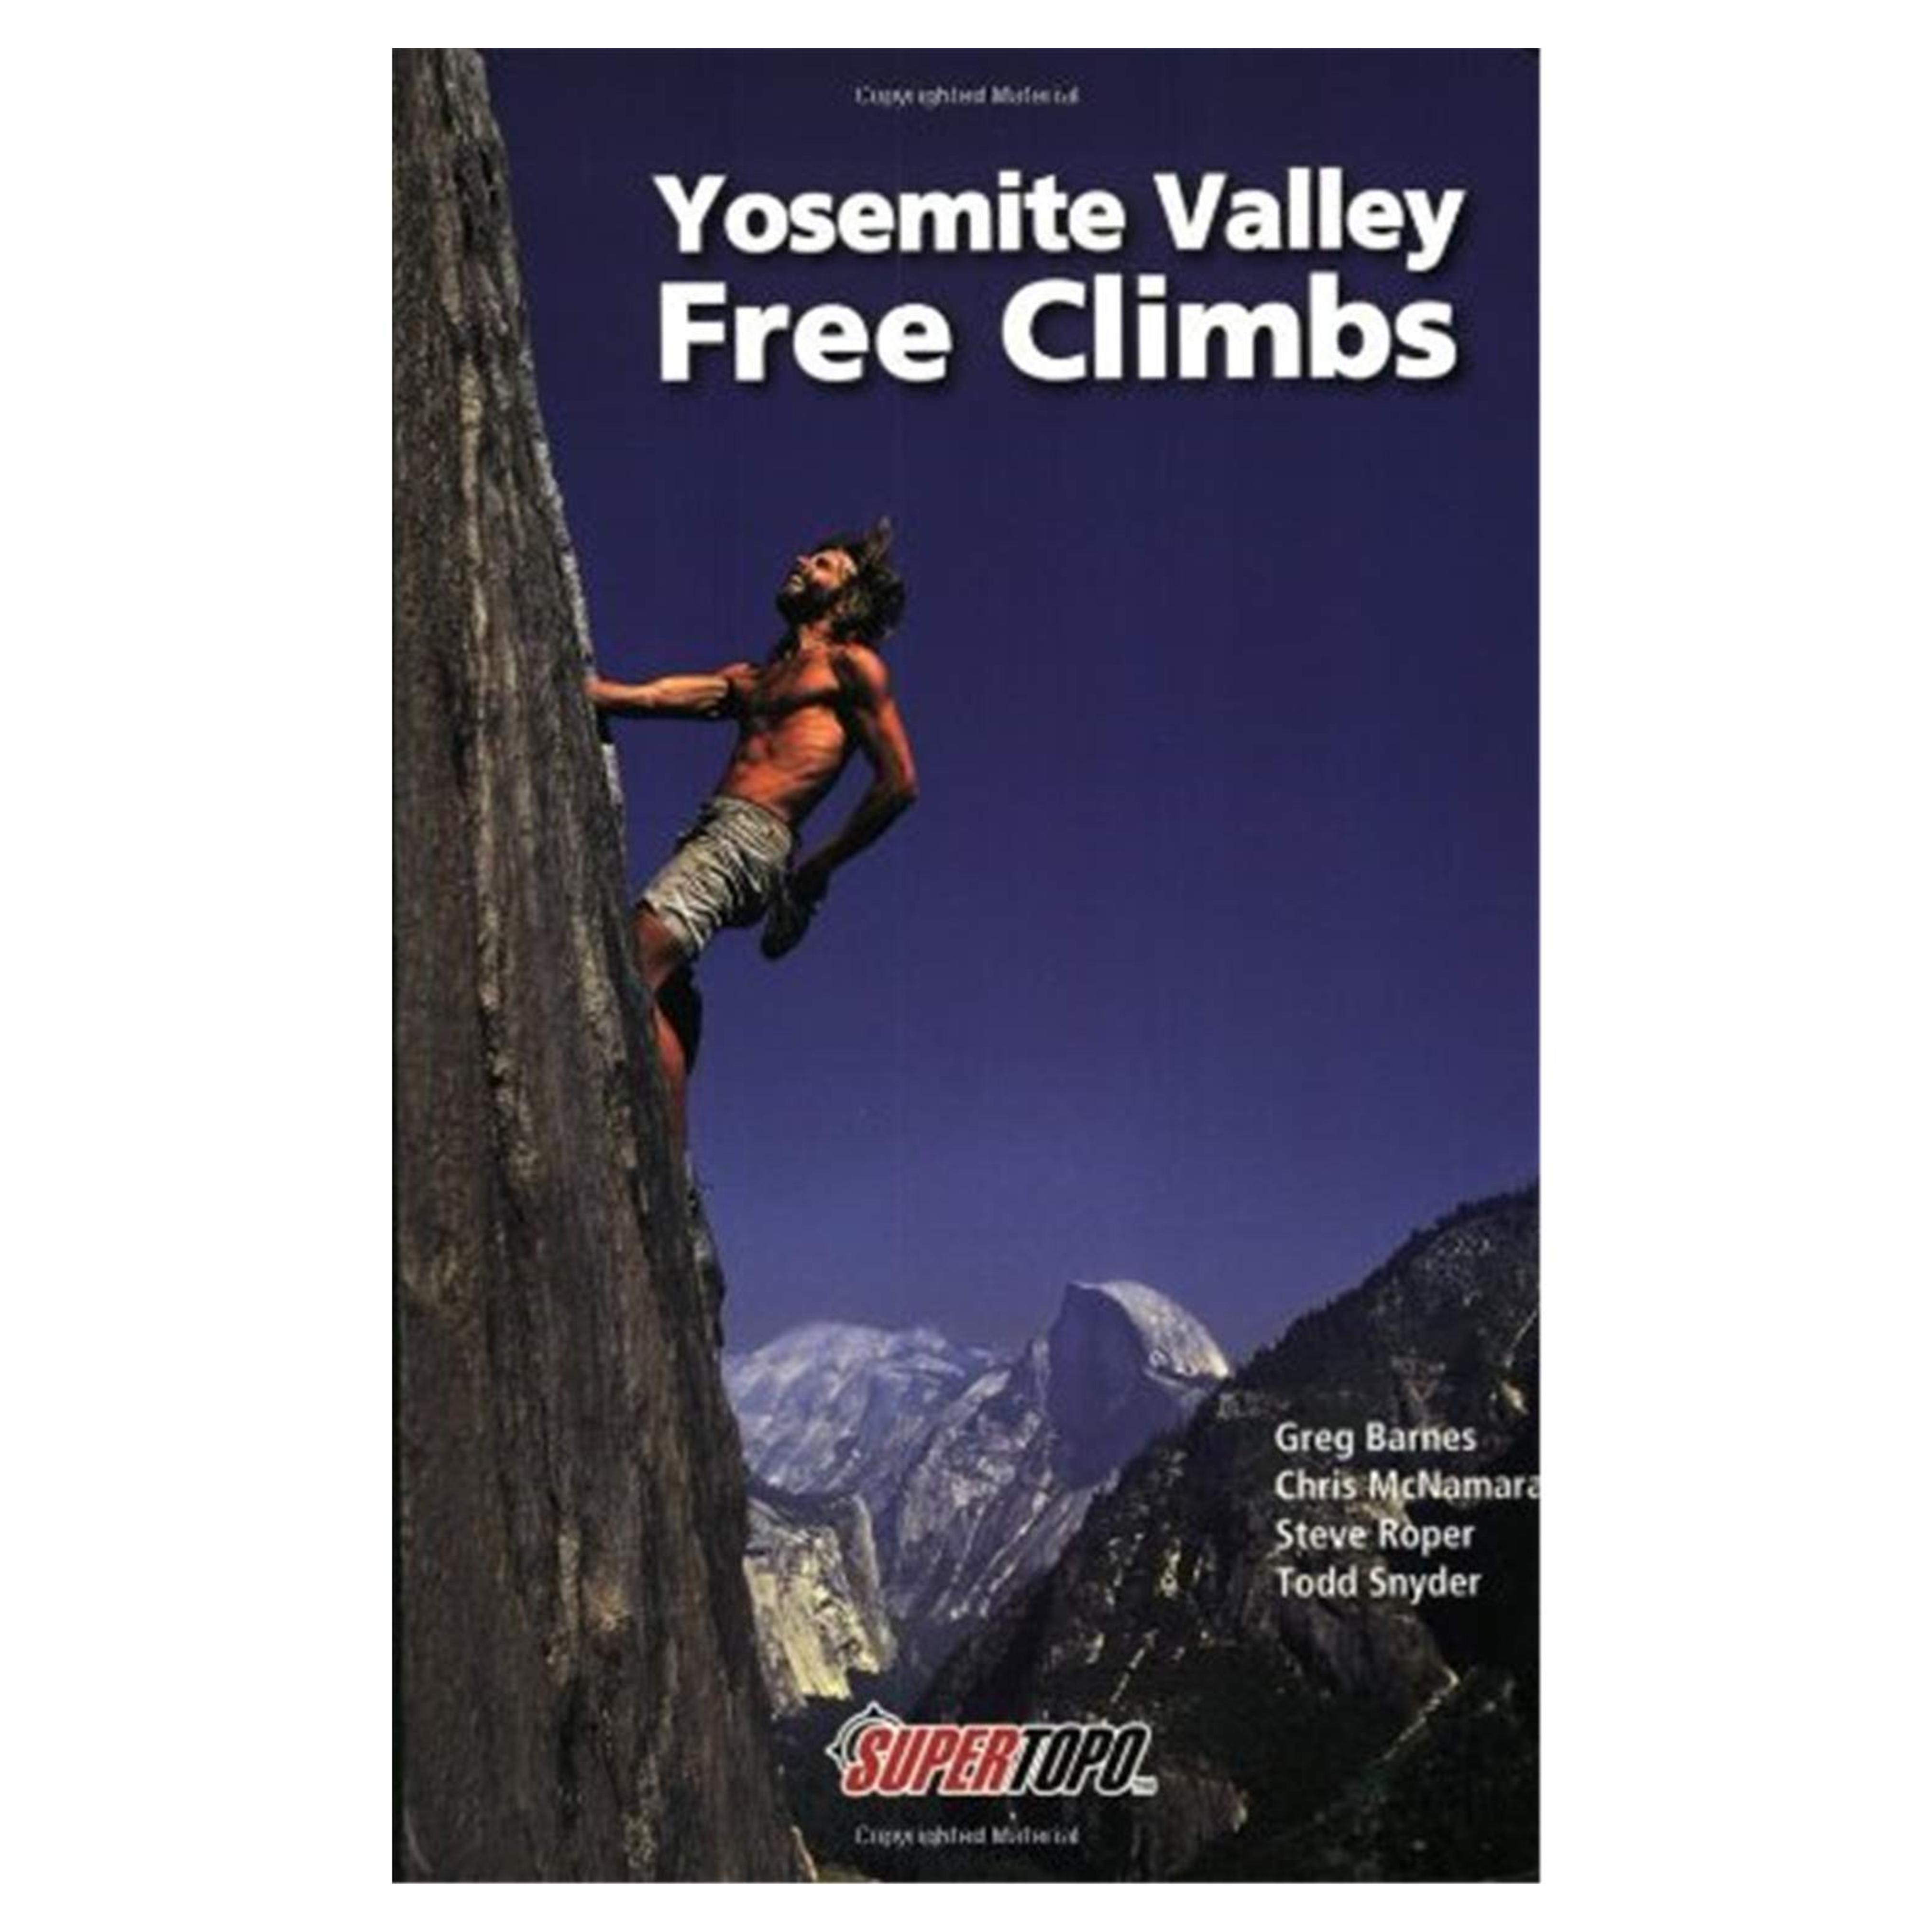 Yosemite Valley Free Climbs: Supertopos: McNamara, Chris, Roper, Steve, Snyder, Todd, Barnes, Greg: 9780967239149: Amazon.com: Books